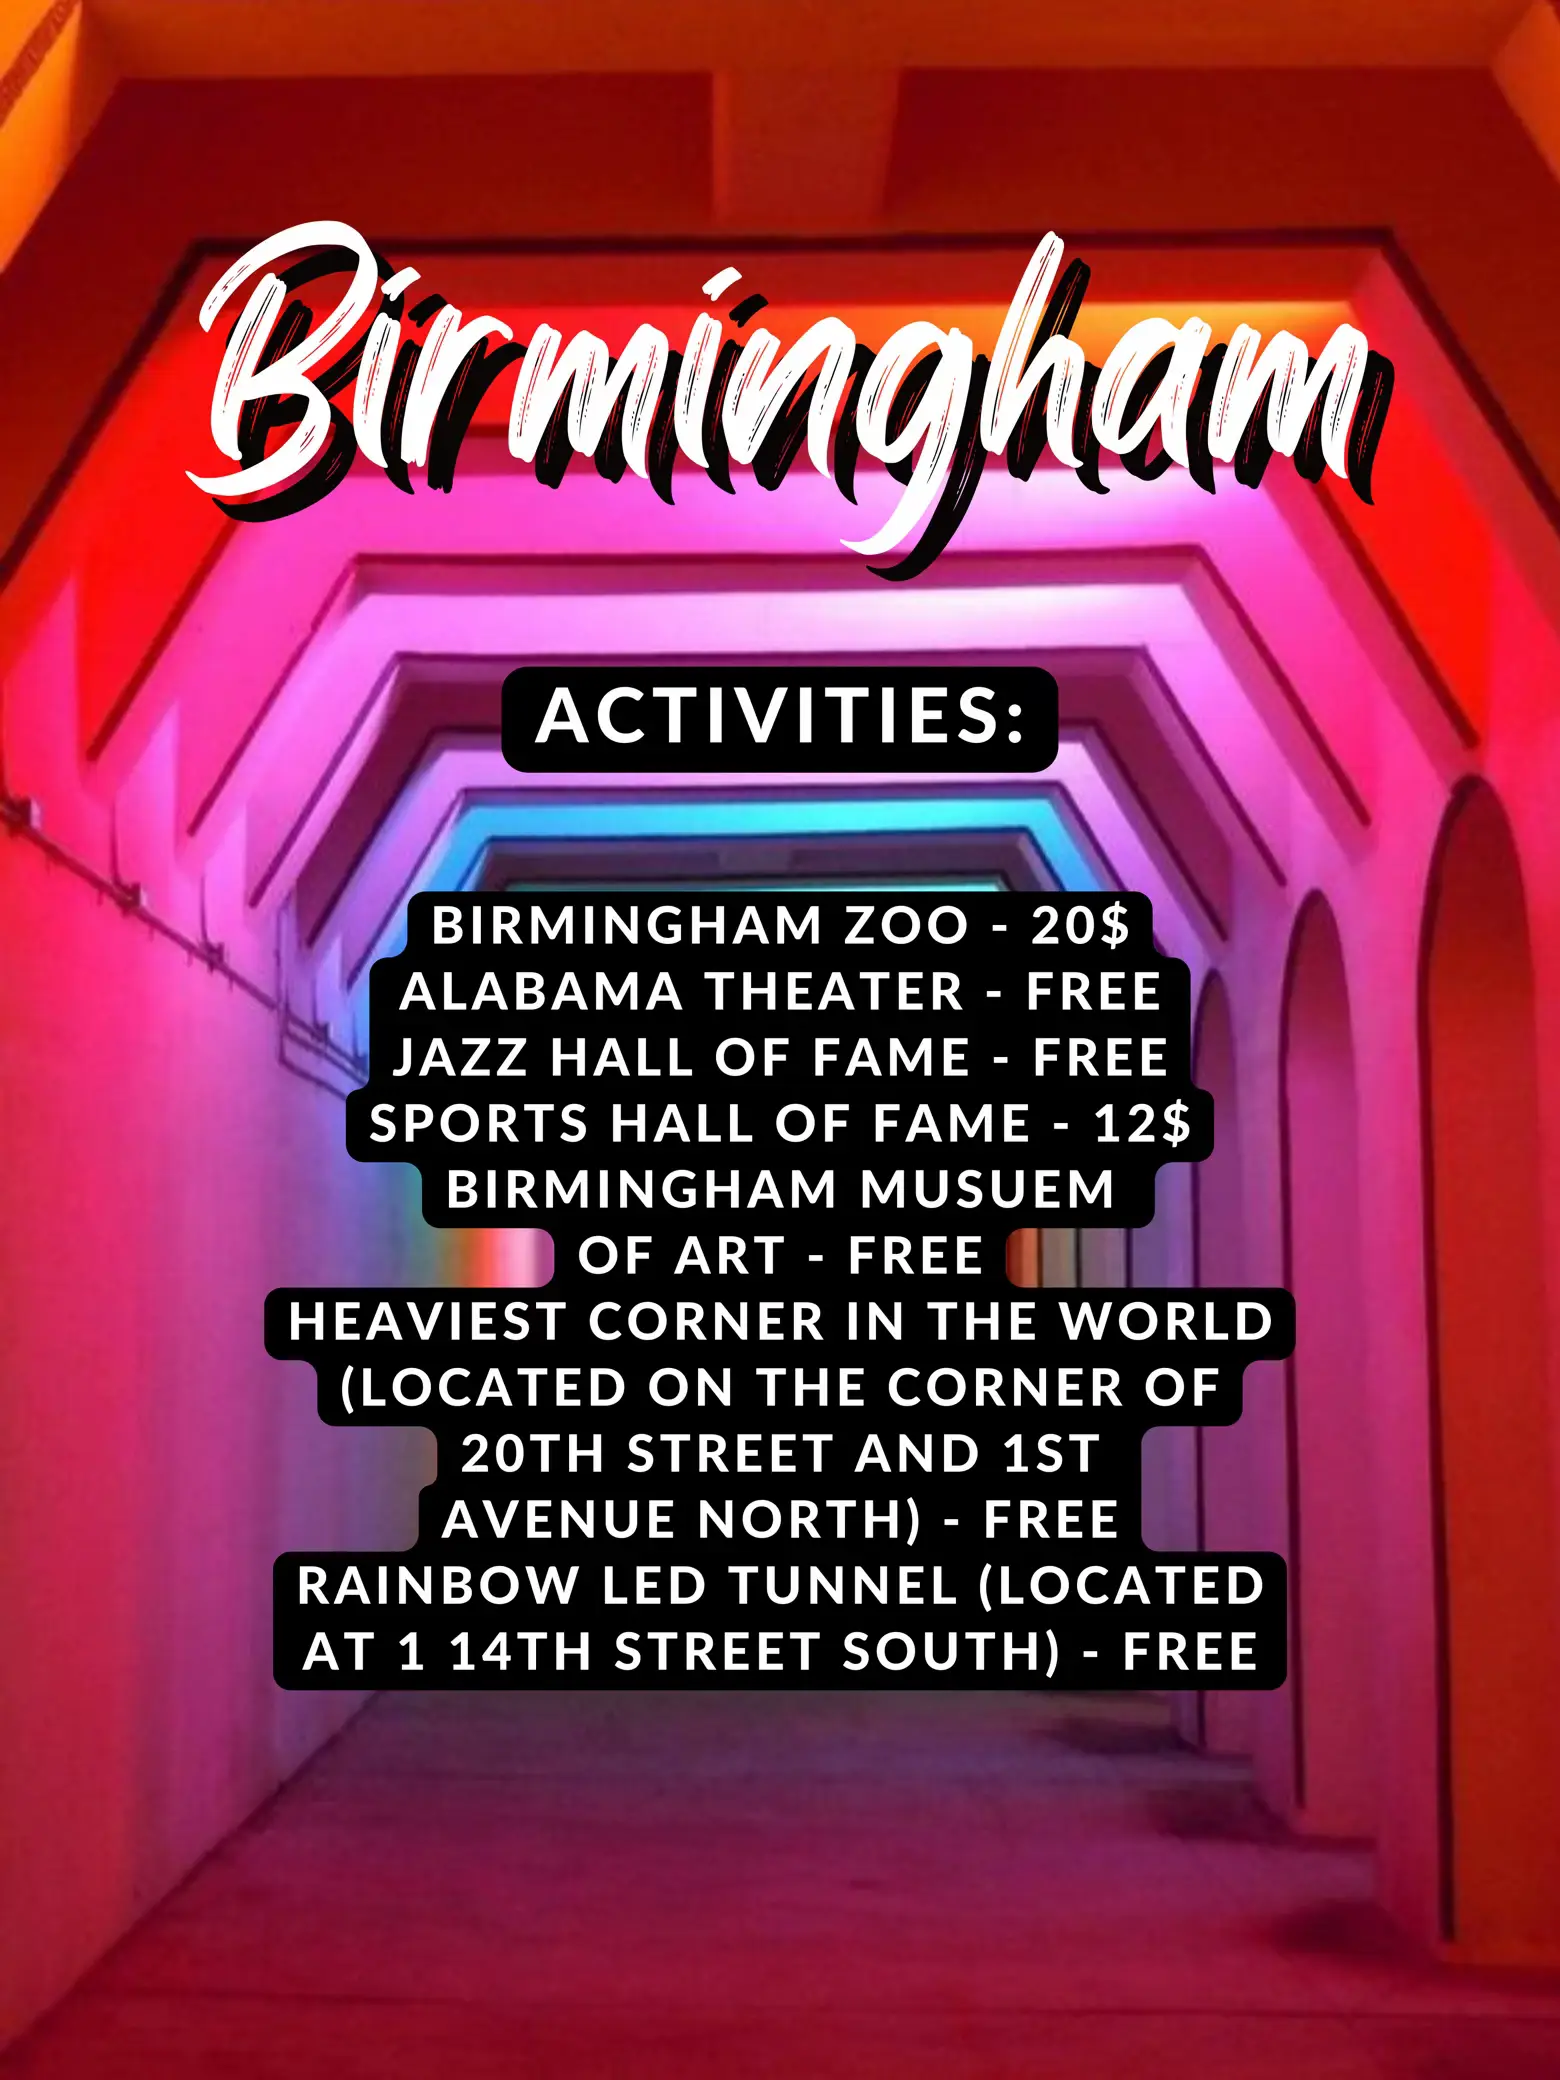  A list of free activities in Birmingham.